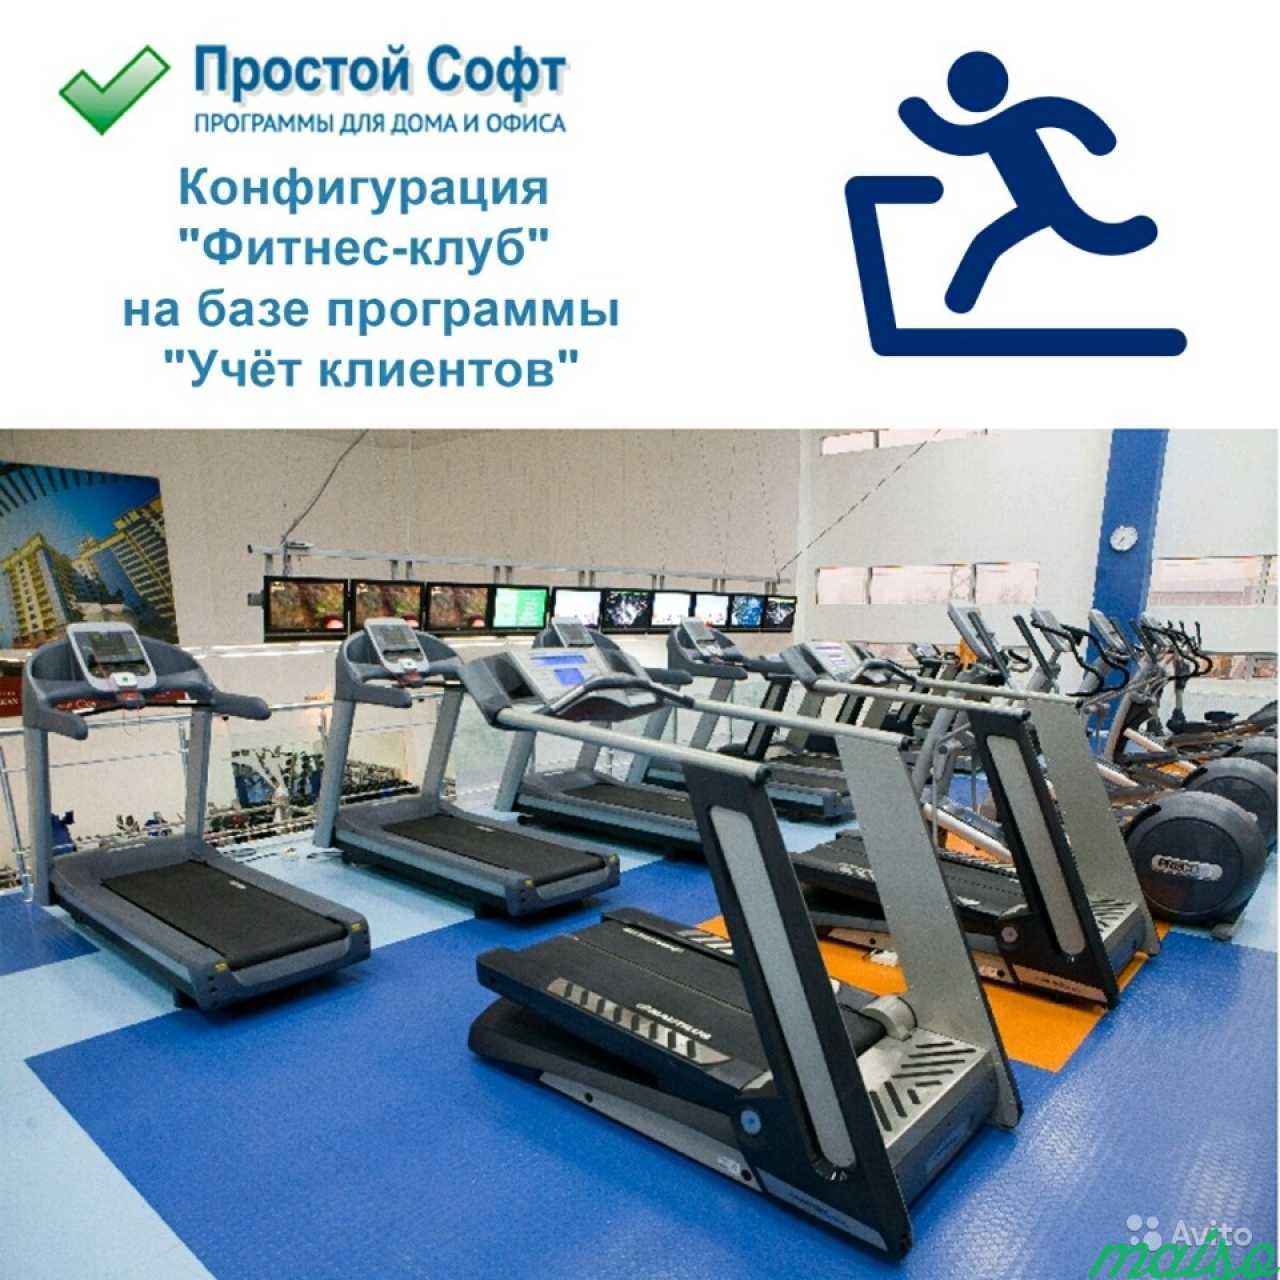 Программа для фитнесклуба в Санкт-Петербурге. Фото 1